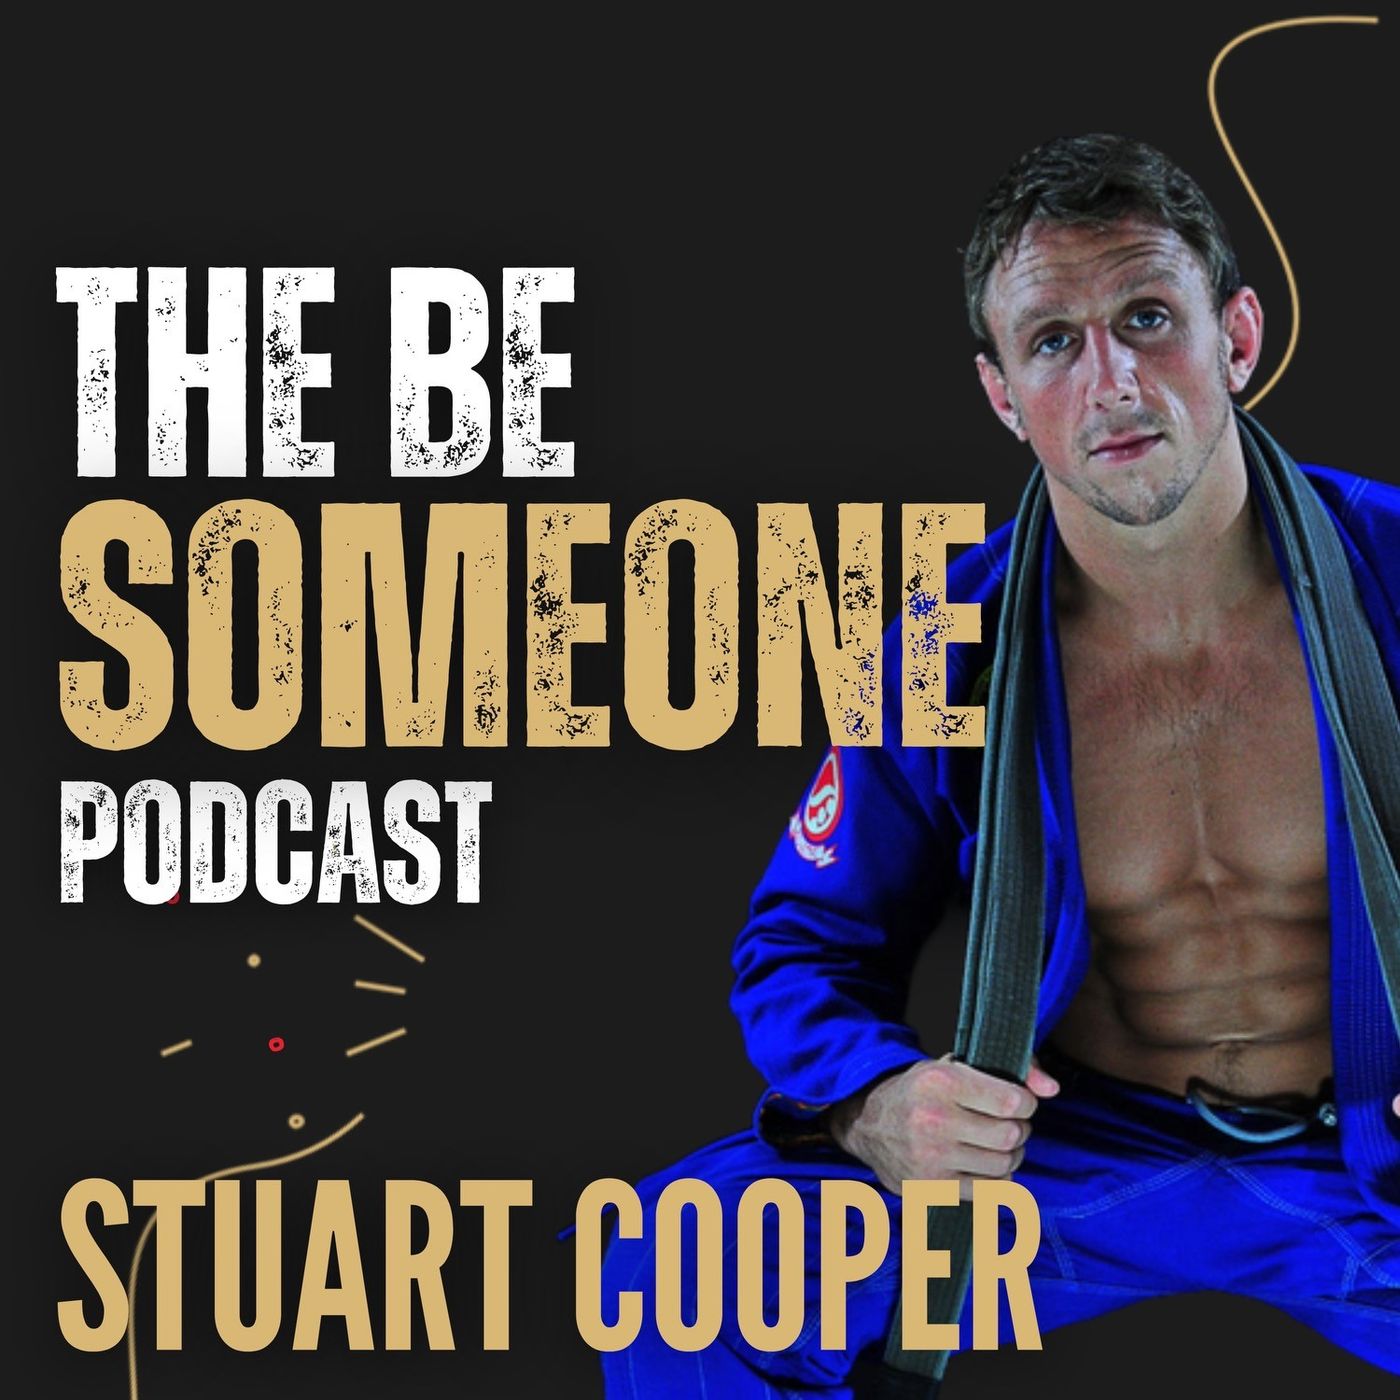 Season 5 Ep: 1 "The Art of Story Telling" Stuart Cooper